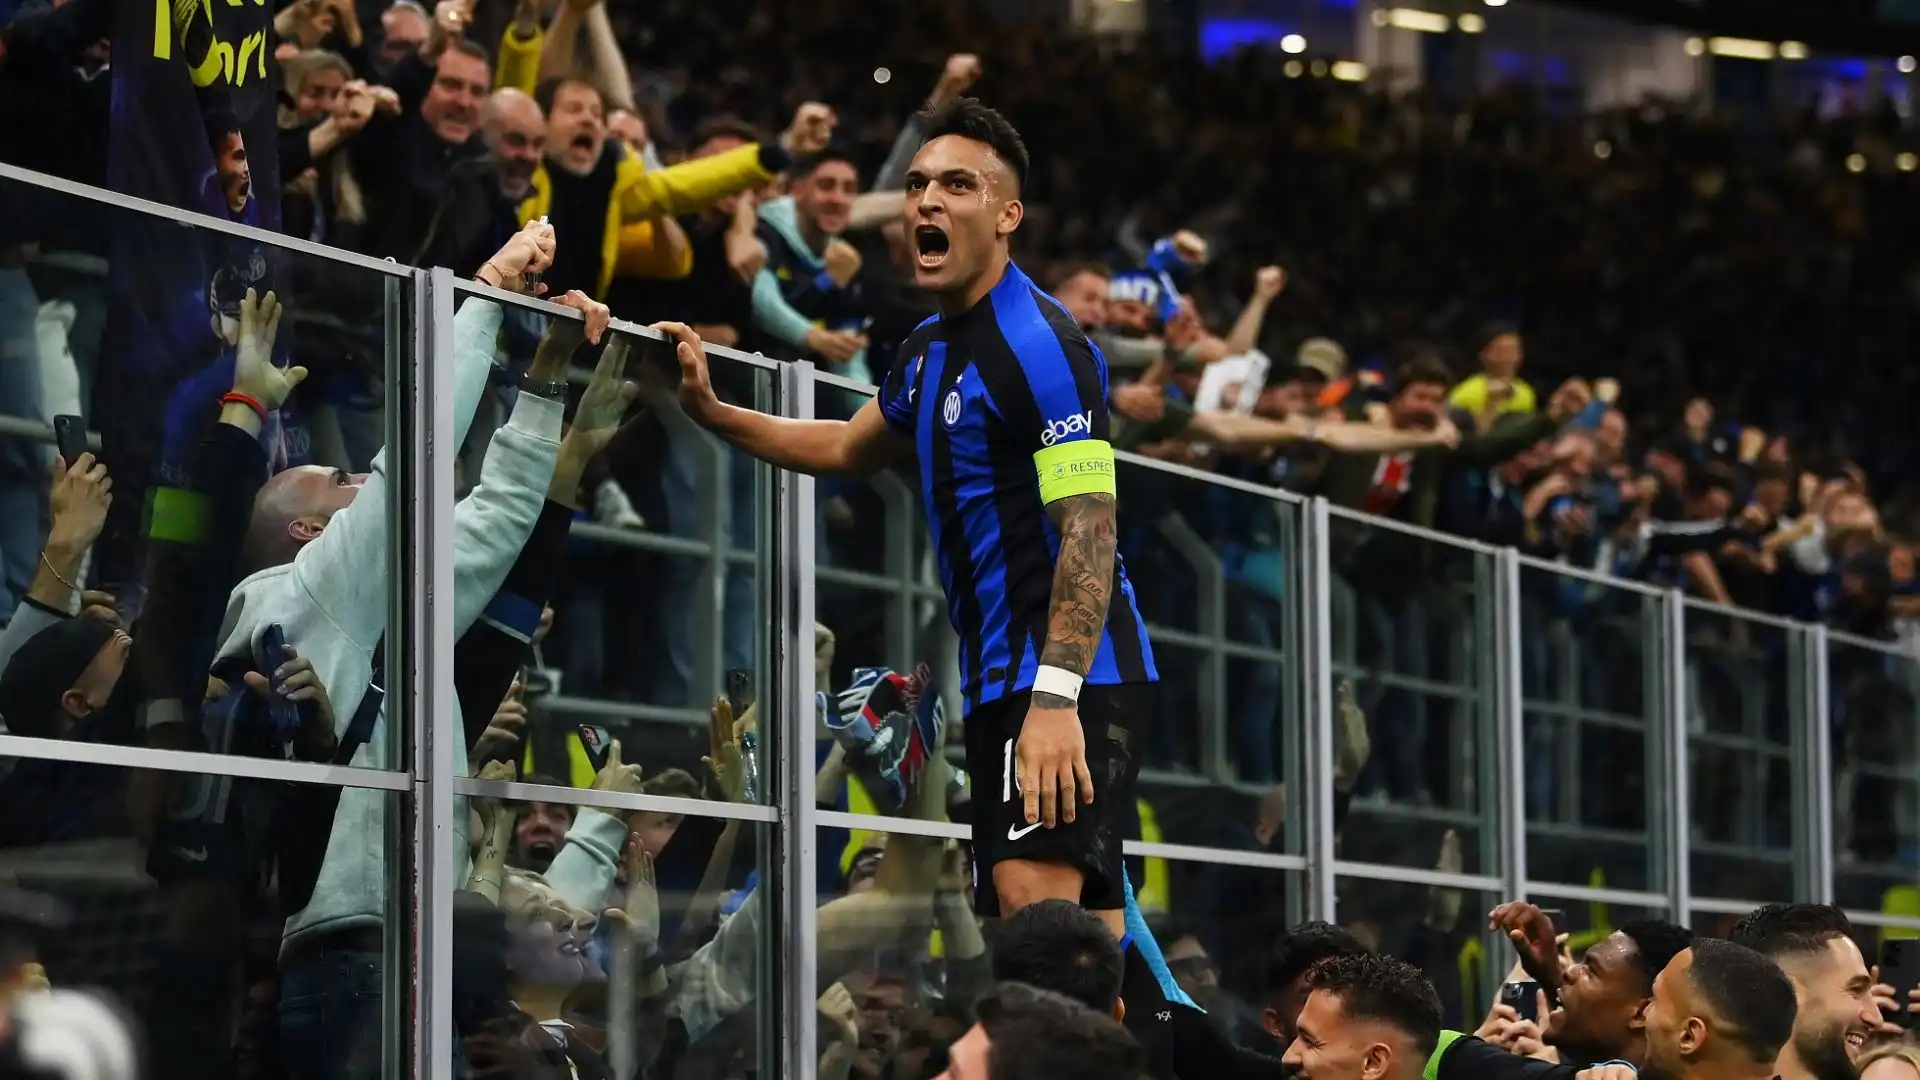 L'Inter è tornata in semifinale di Champions League dopo 13 anni